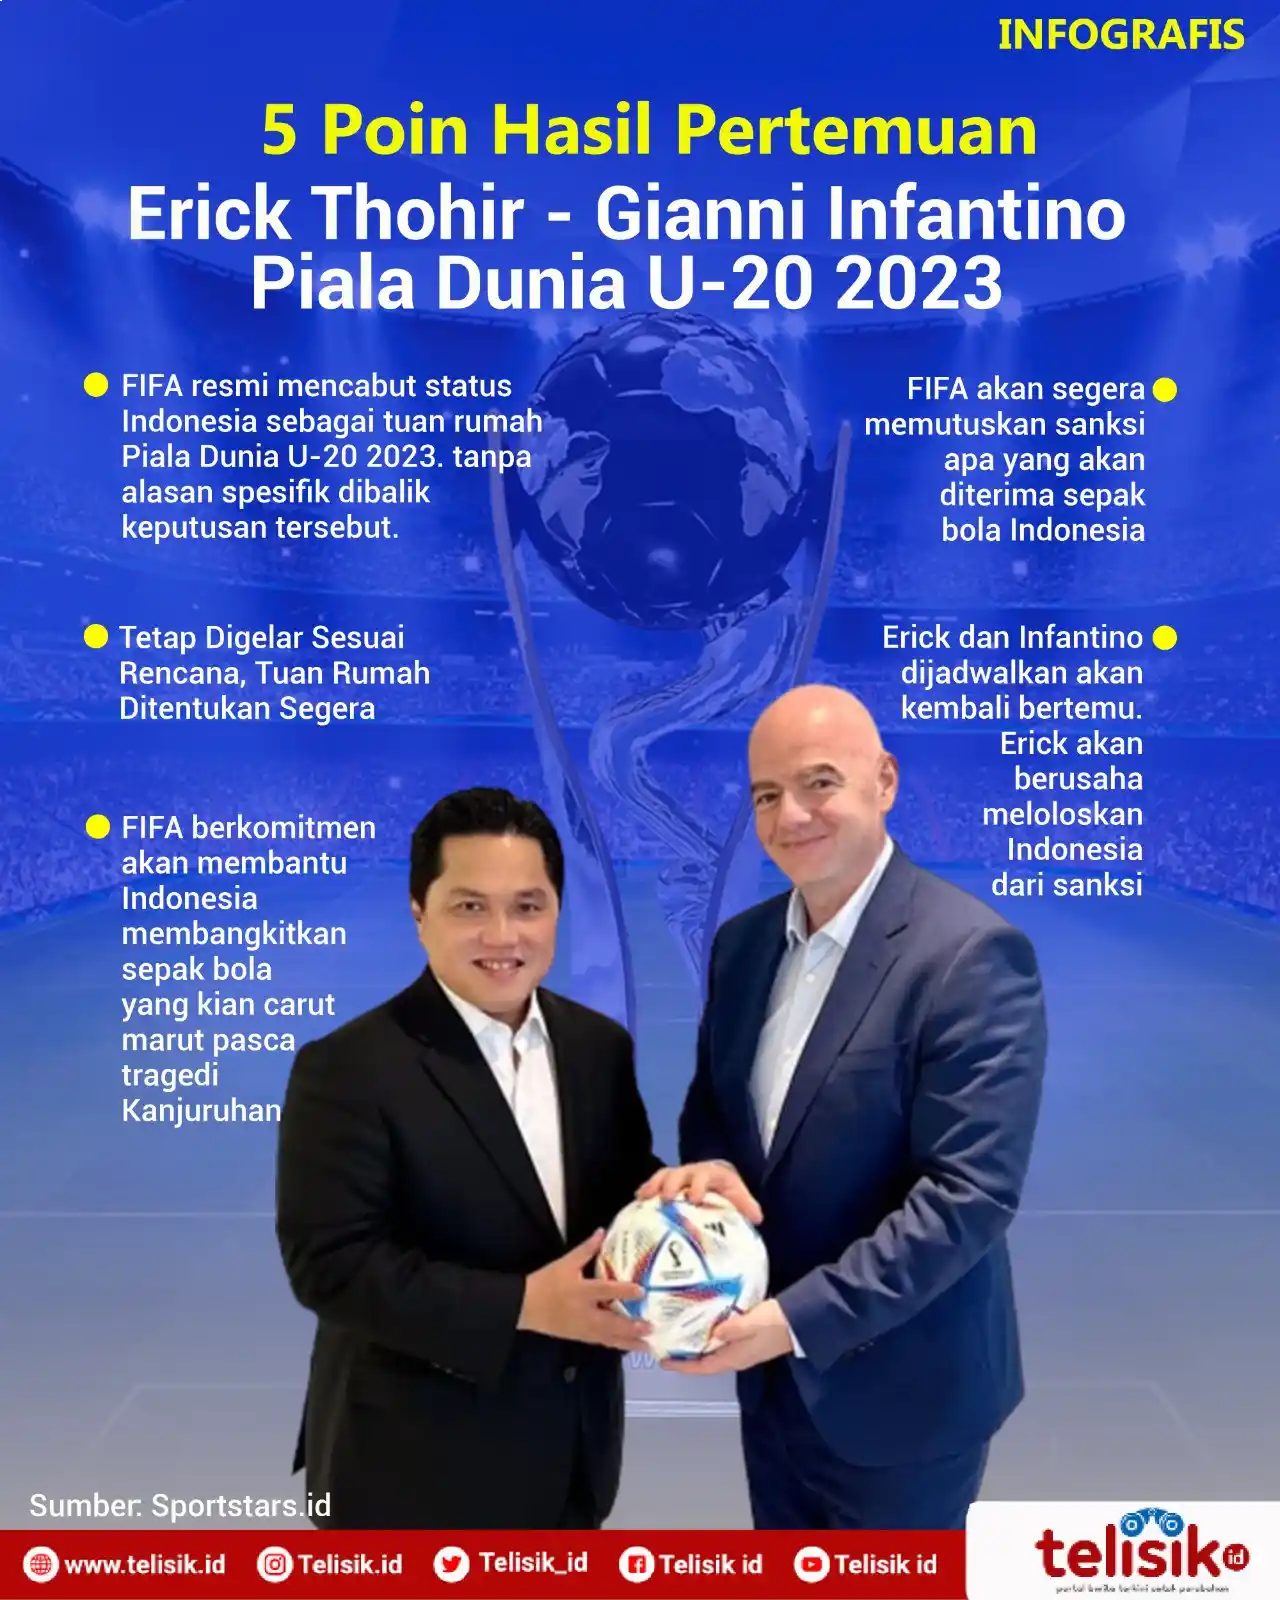 Infografis: 5 Point Hasil Pertemuan Erick Thohir - Gianni Infantino Terkait Piala Dunia U-20 2023